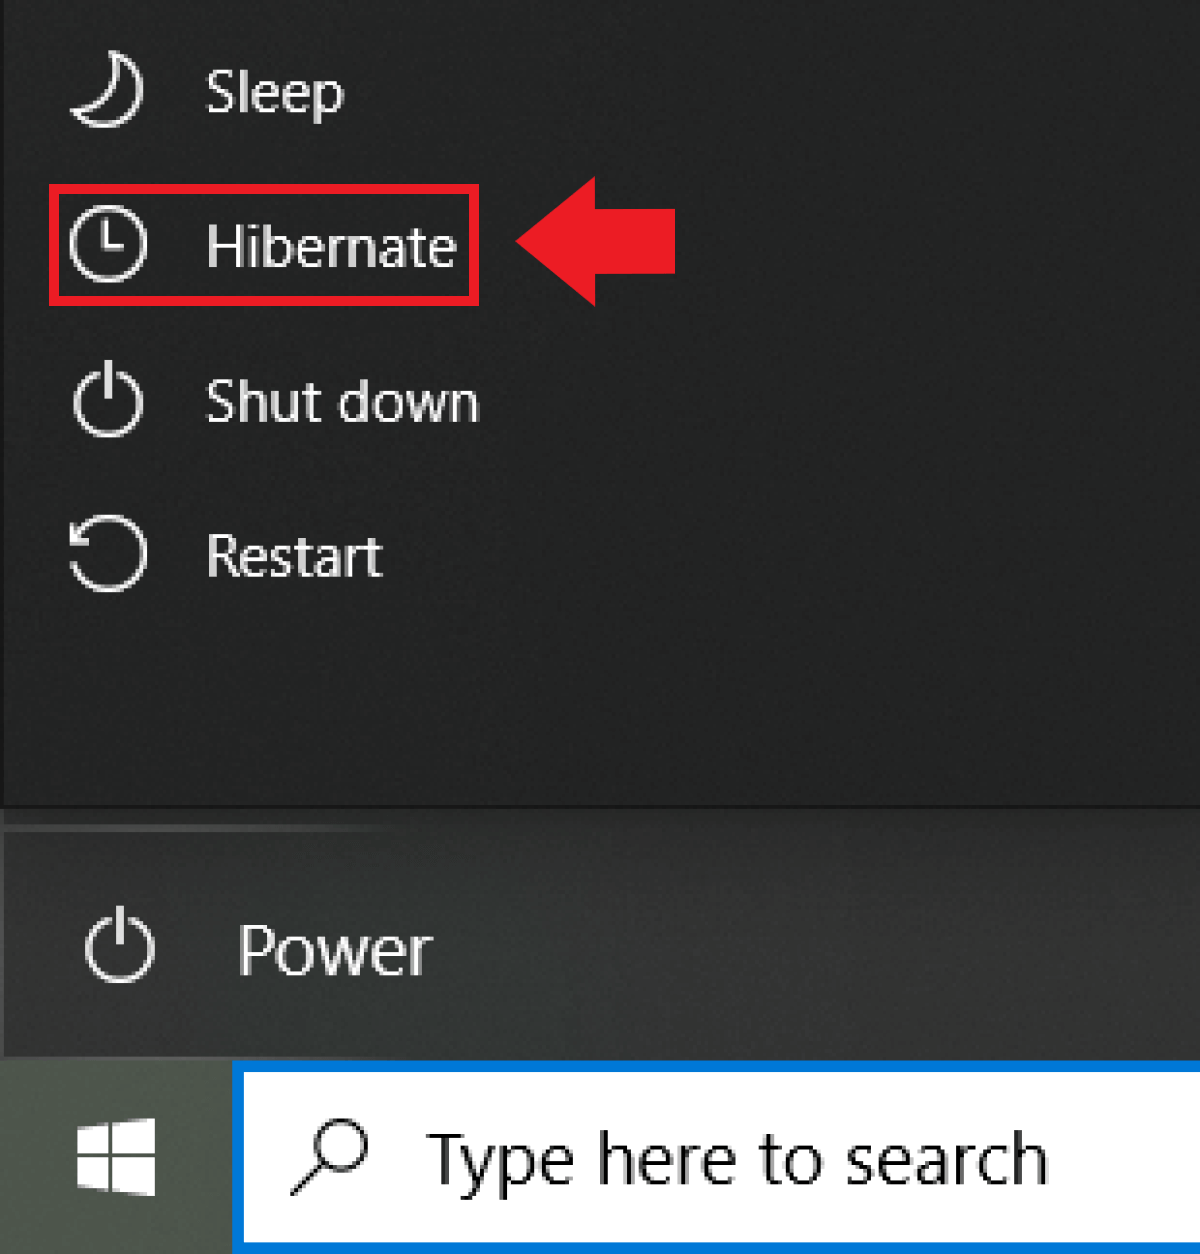 Windows 10: “Hibernate” option in Windows Start menu